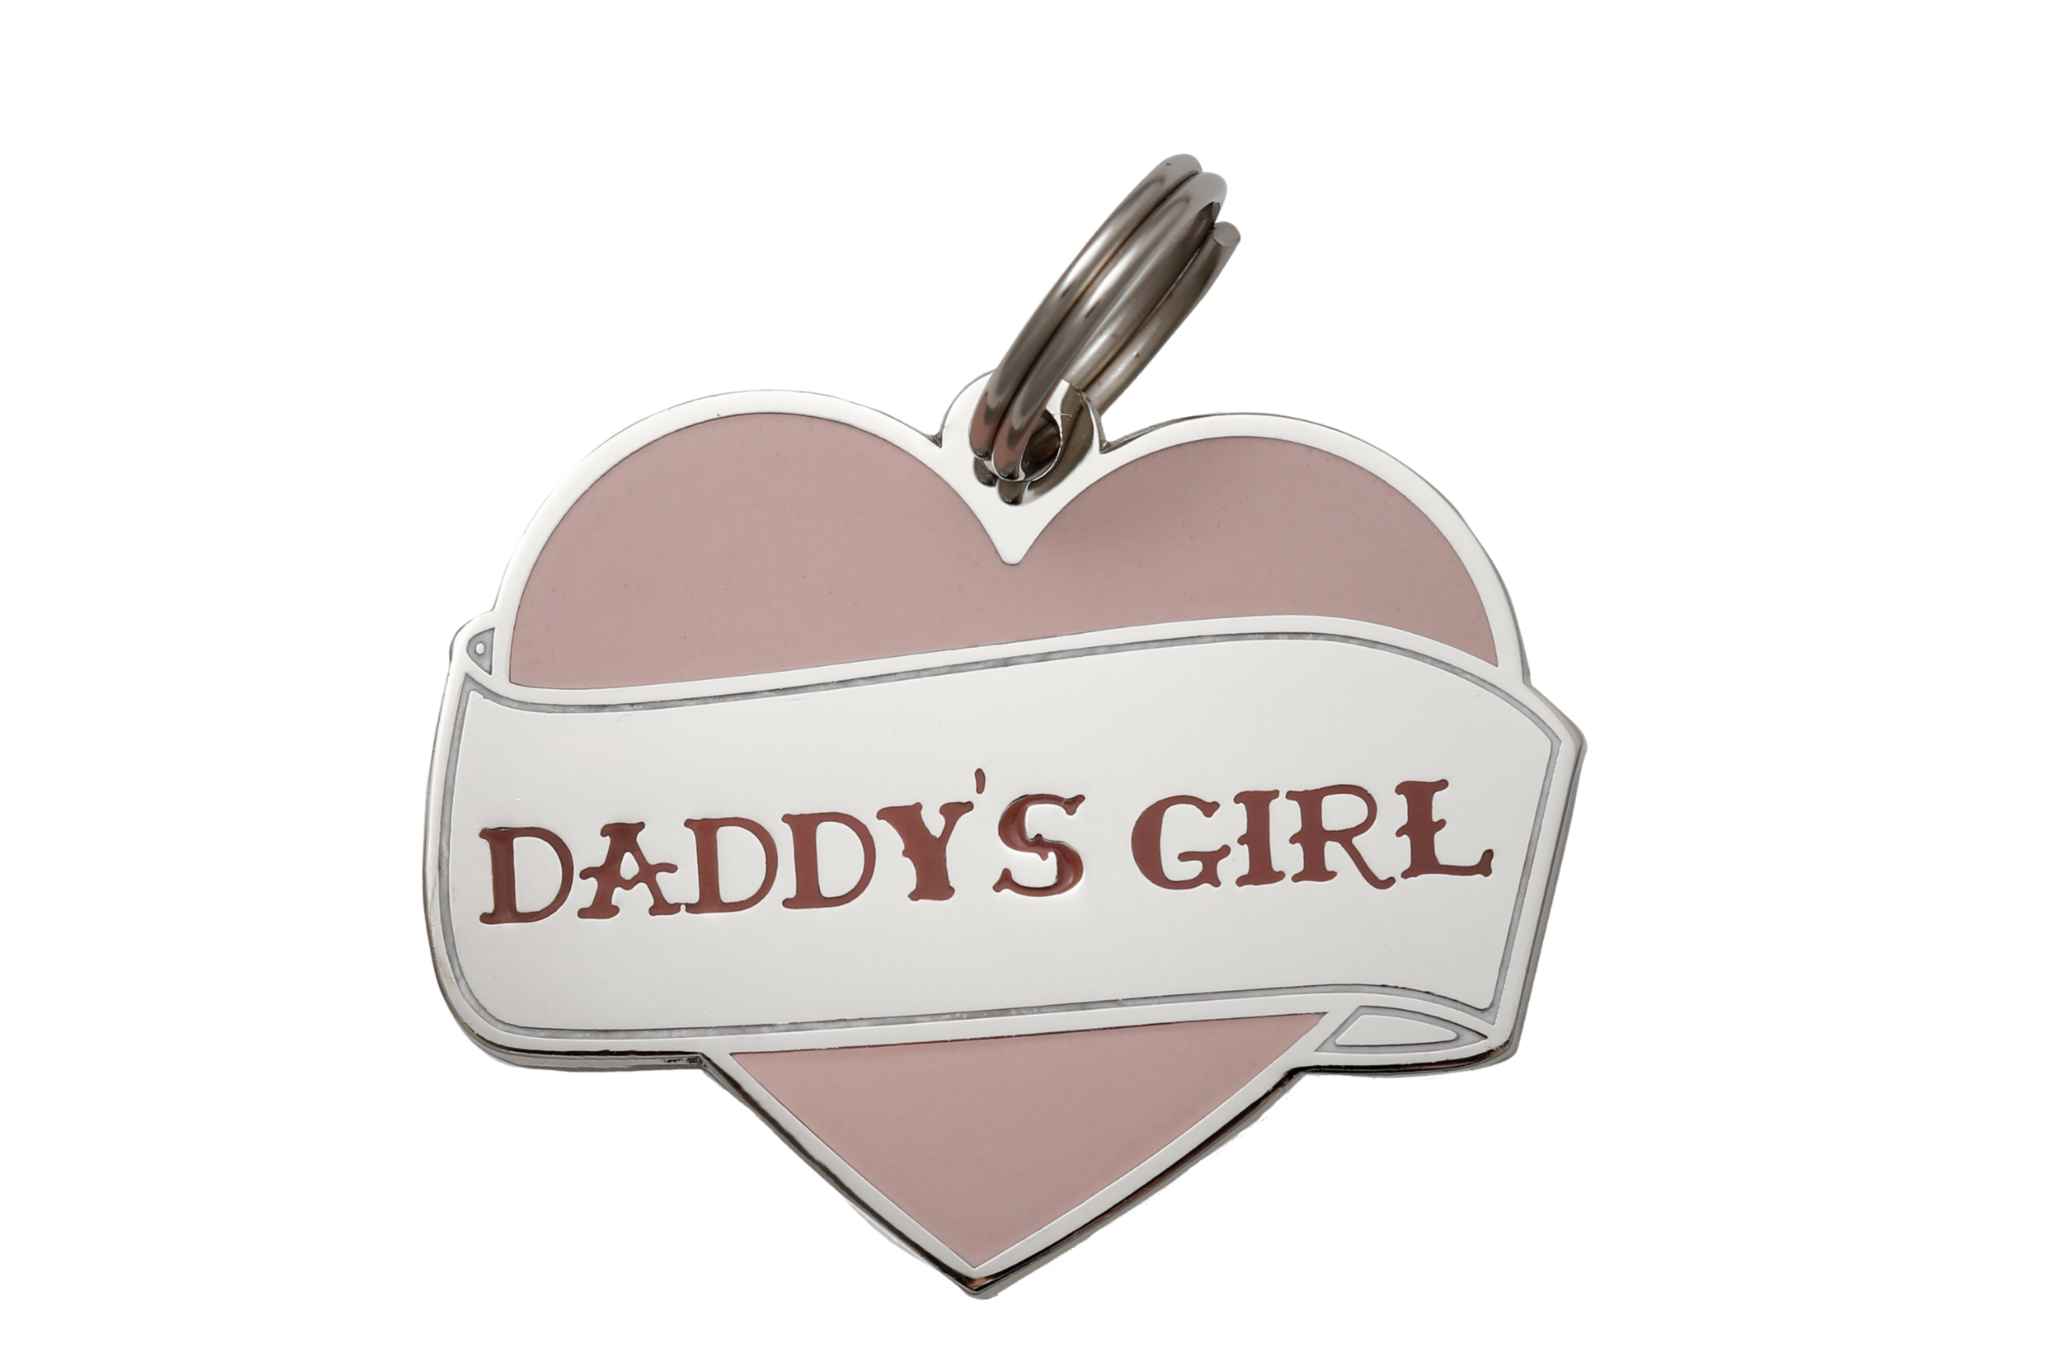 'Daddy's Girl' Pet ID Tag